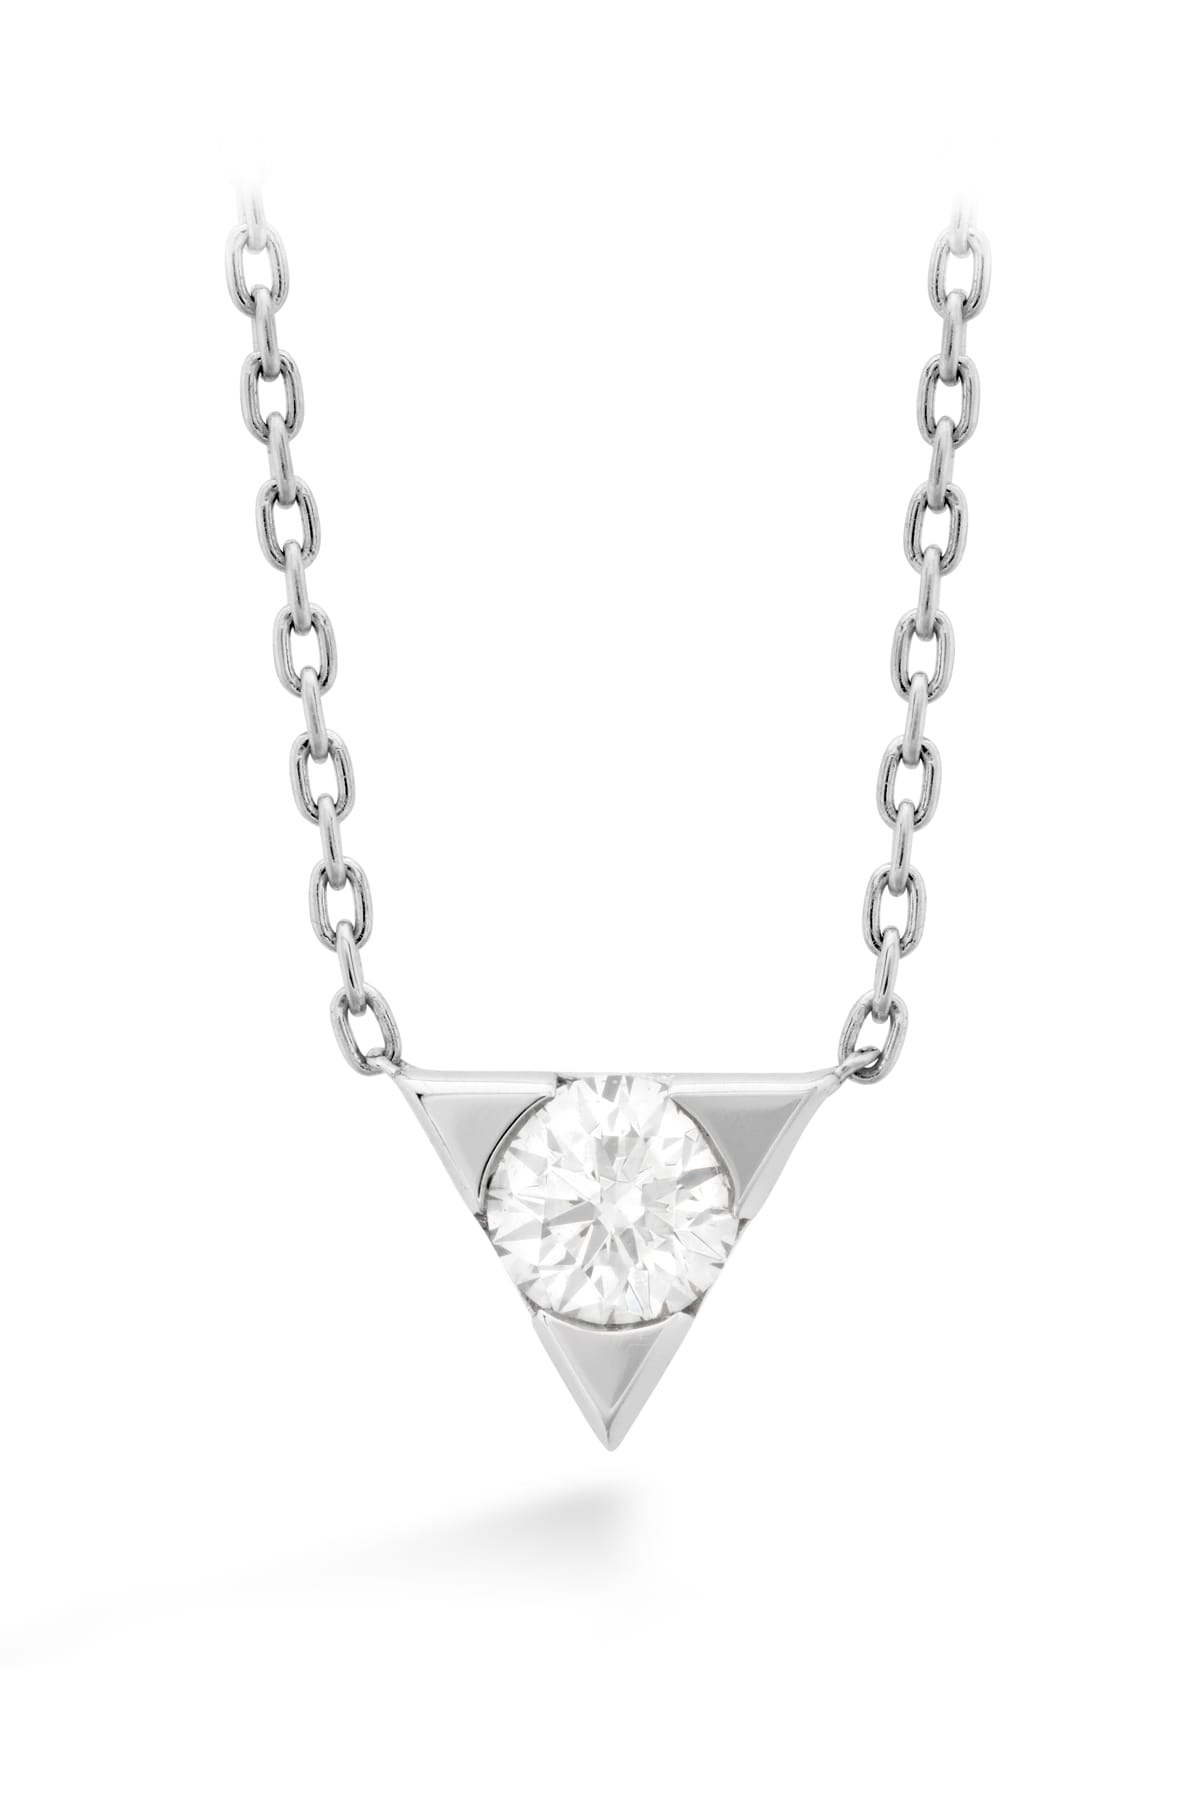 Triplicity Single Diamond Pendant From Hearts On Fire available at LeGassick Diamonds and Jewellery Gold Coast, Australia.